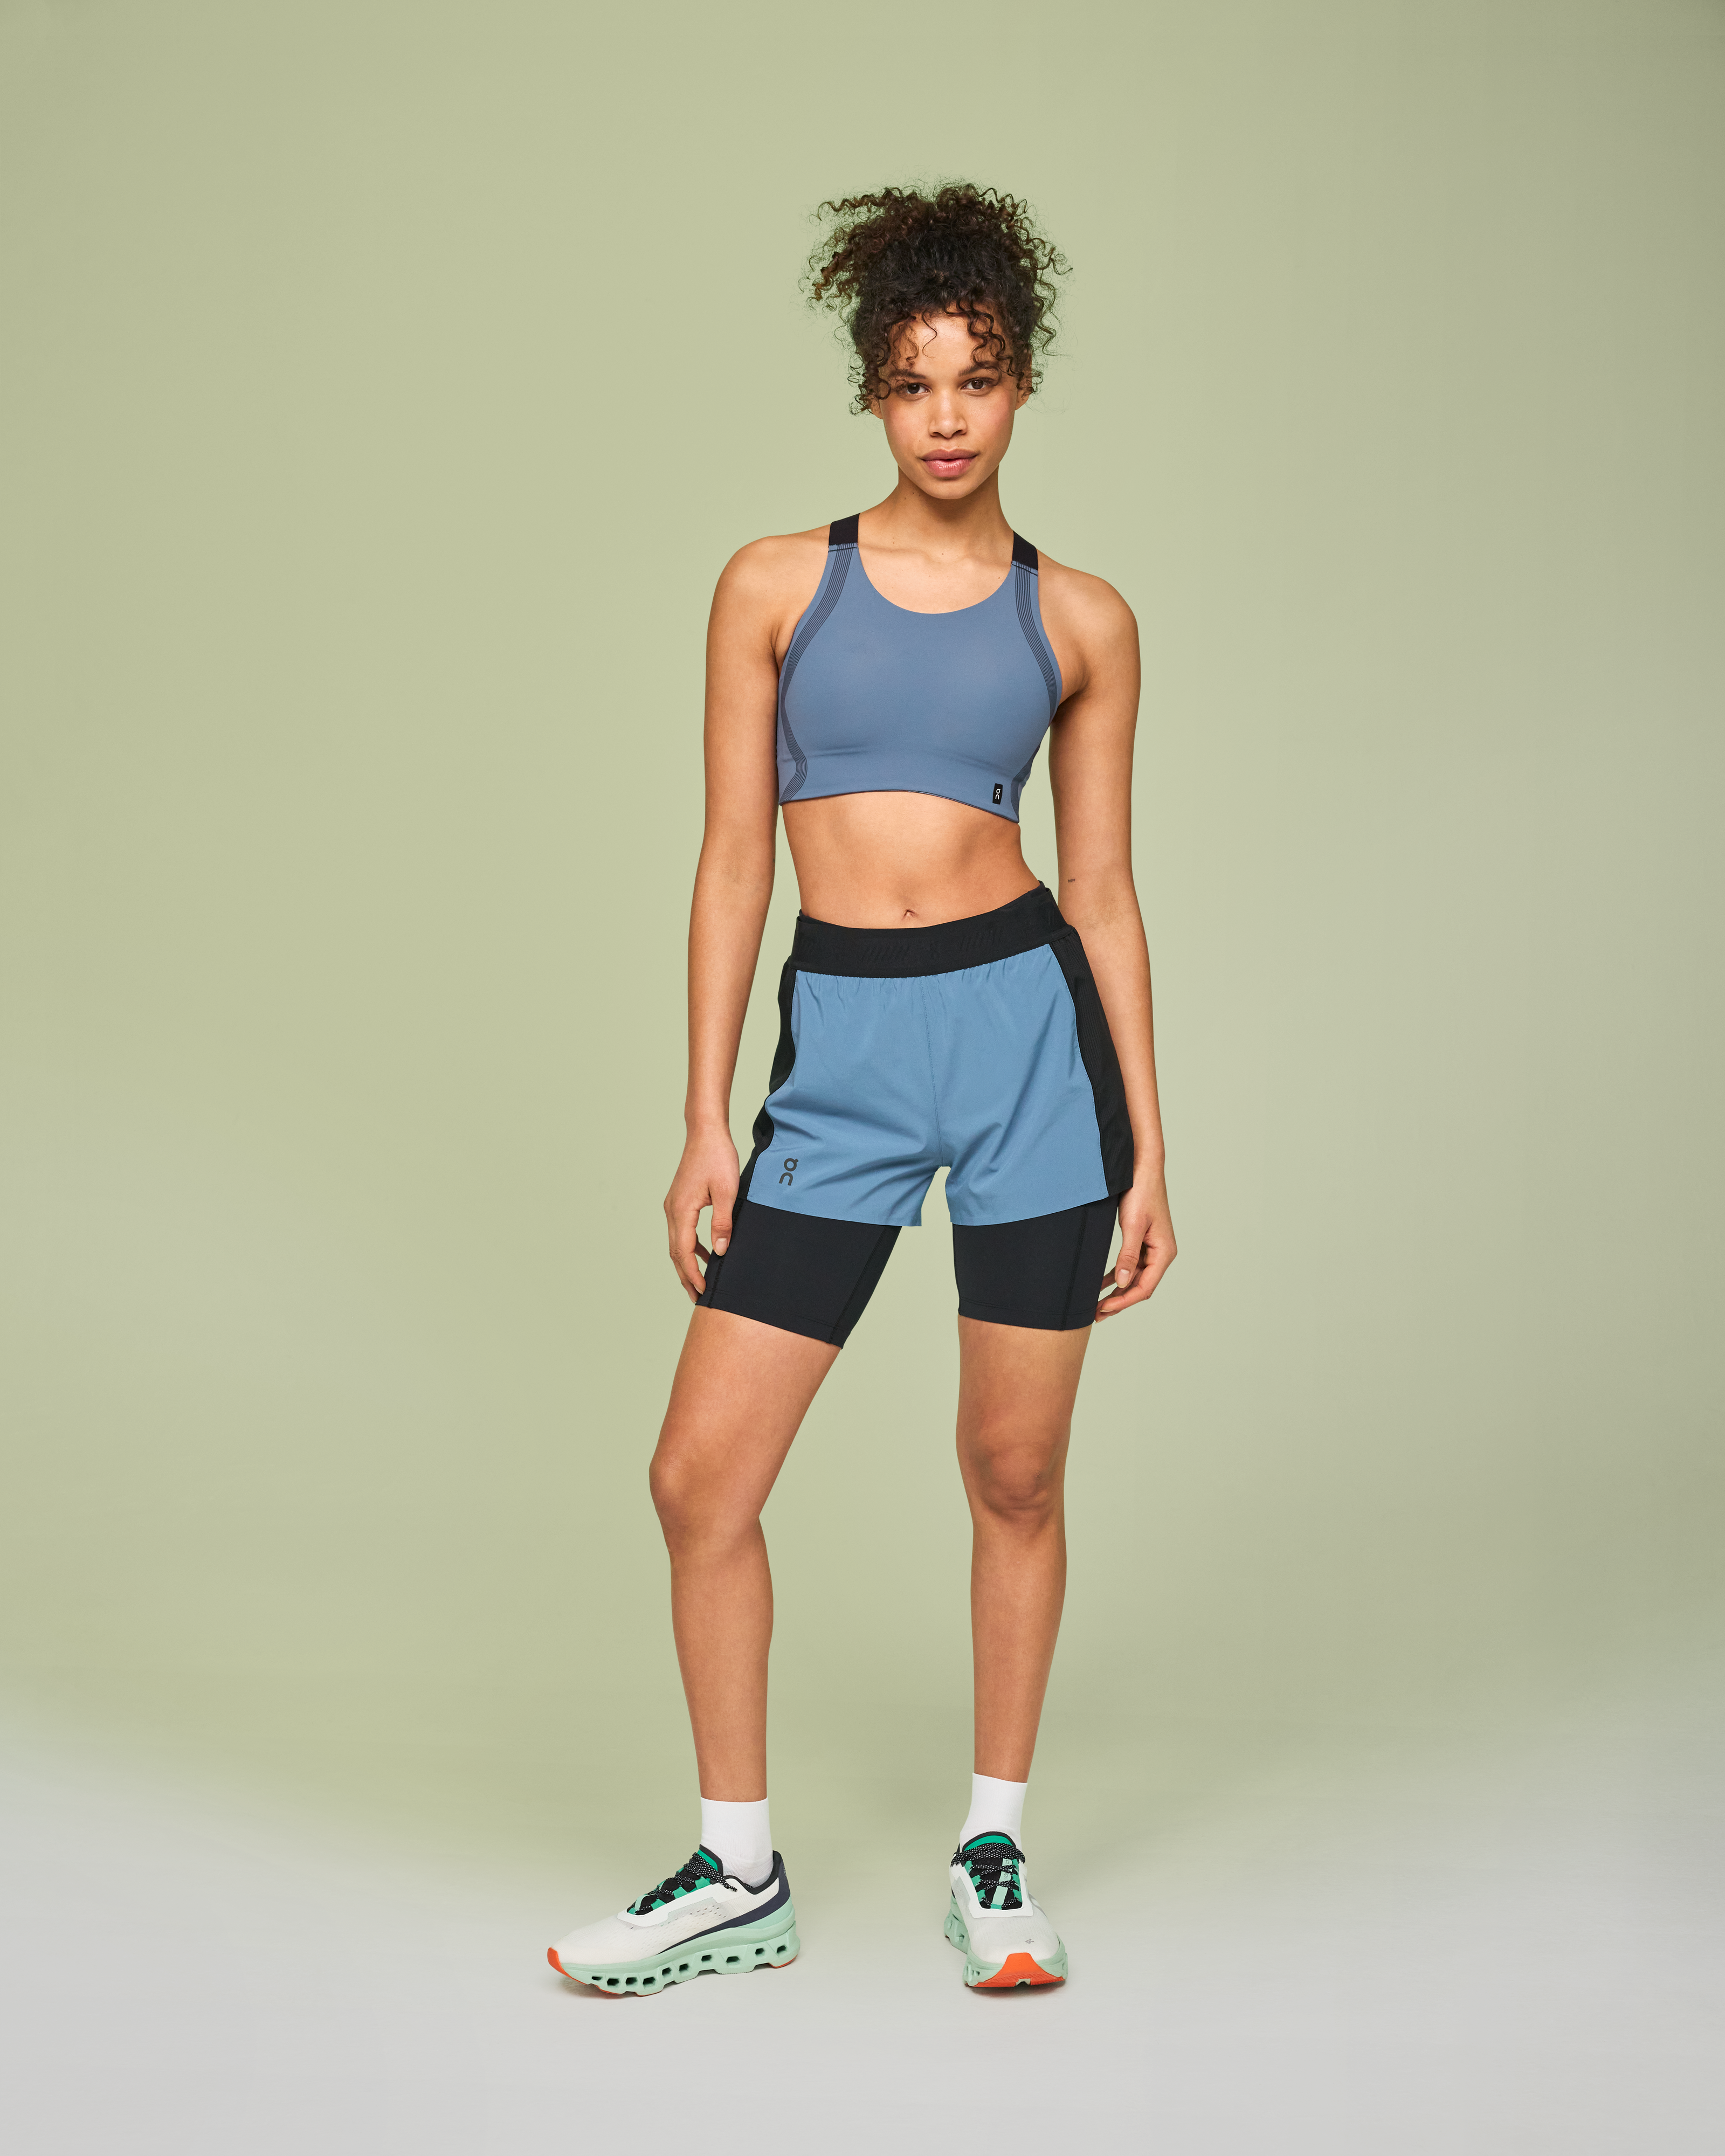 NEW Women's Sport Shorts & Sports Bra – For Women Who Do It All